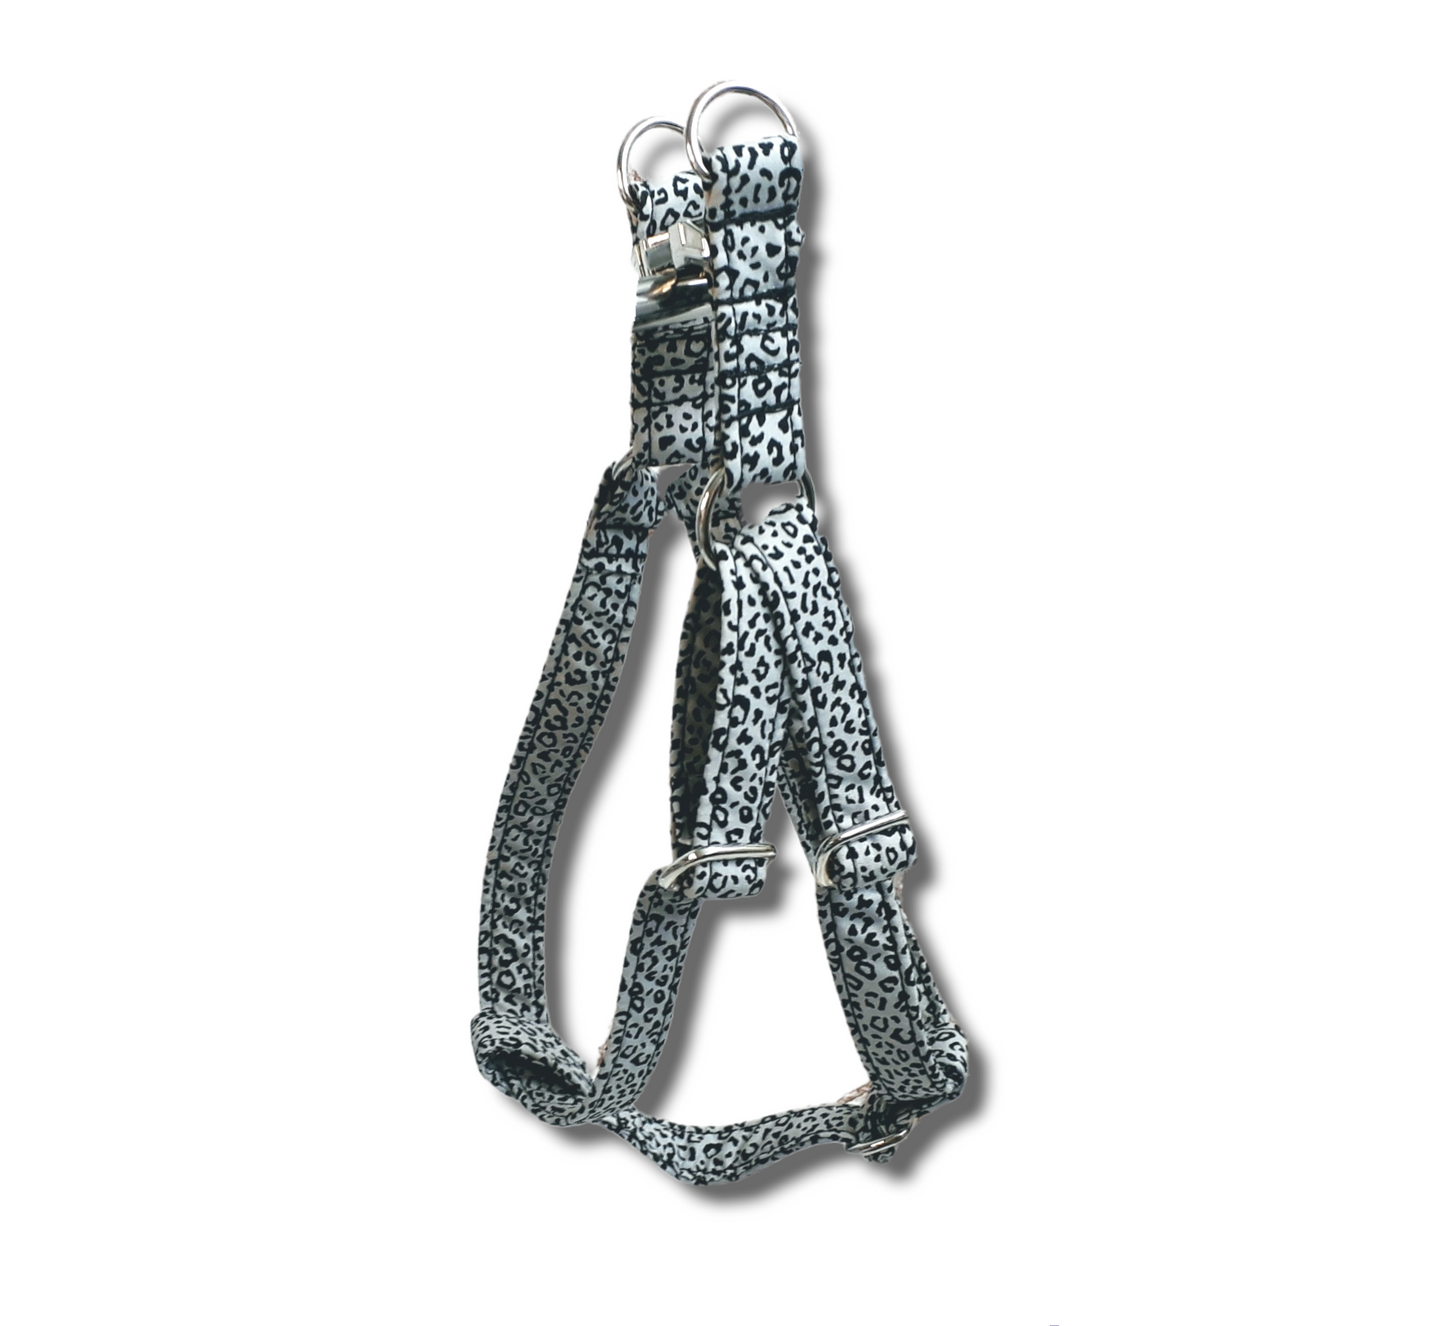 Adjustable step in dog harness - silver leopard print